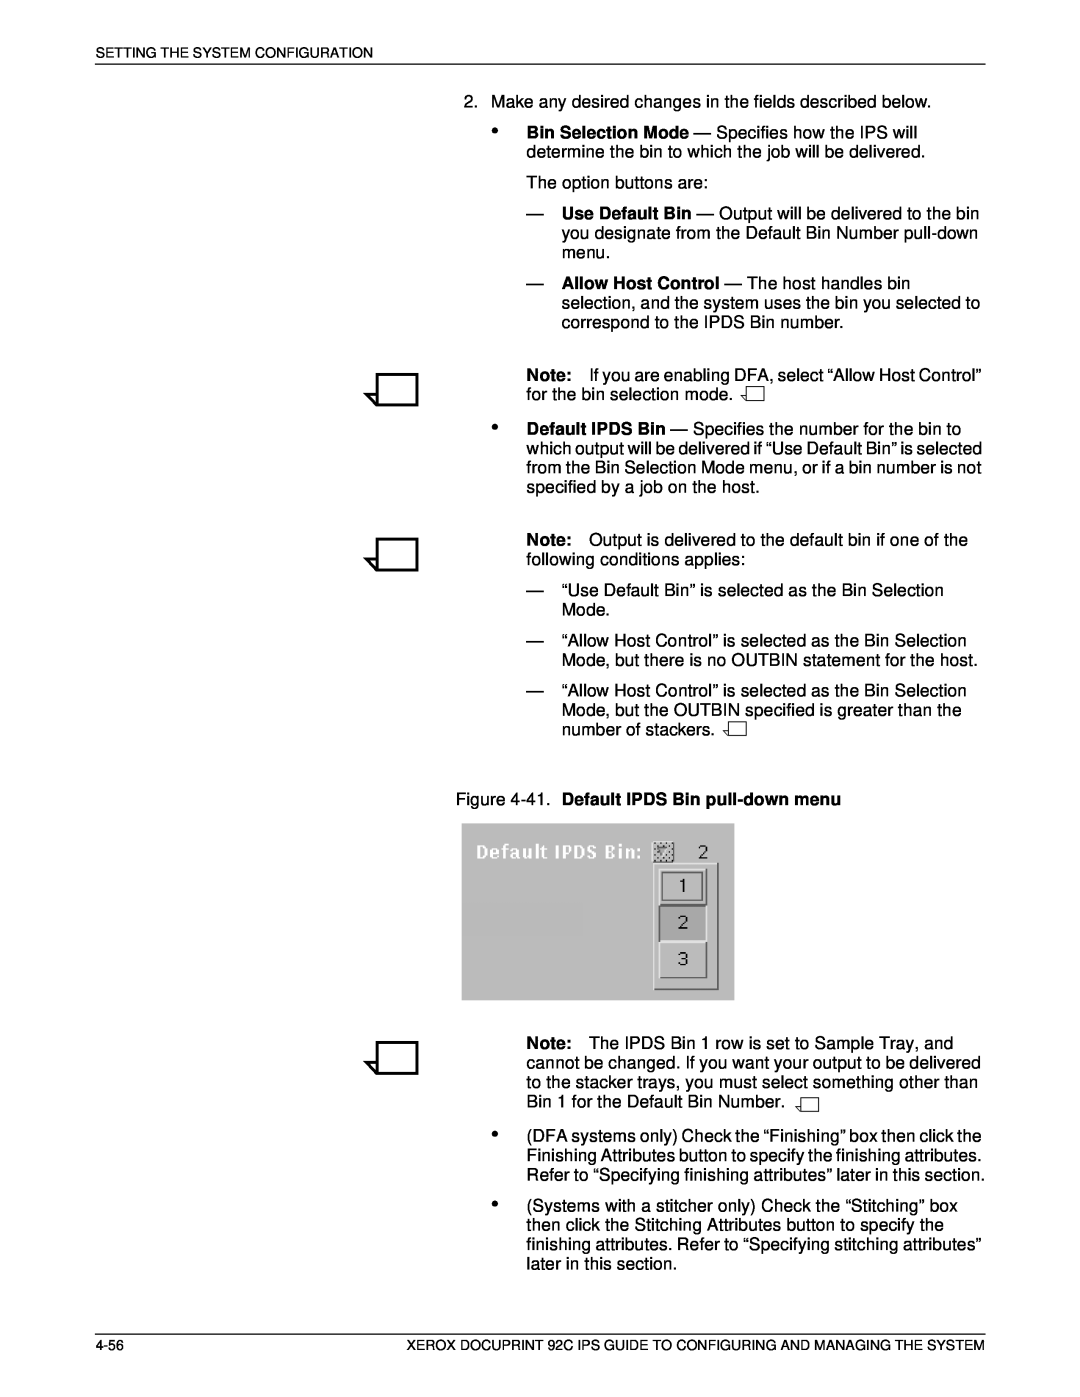 Xerox 92C IPS manual 41. Default IPDS Bin pull-down menu 